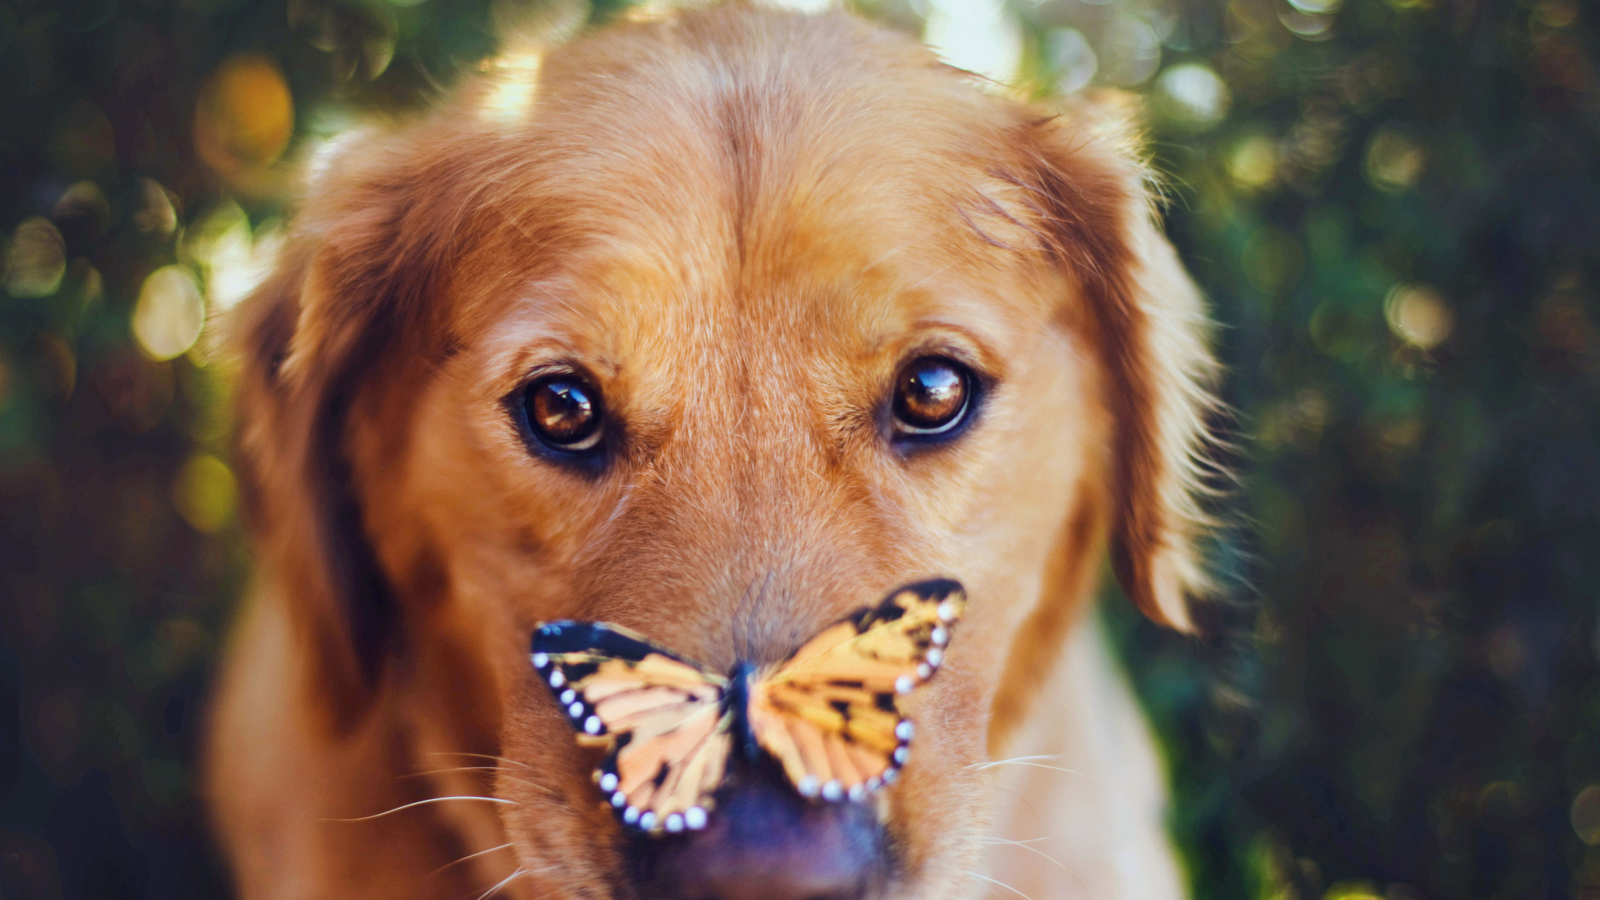 Обои Dog And Butterfly 1600x900